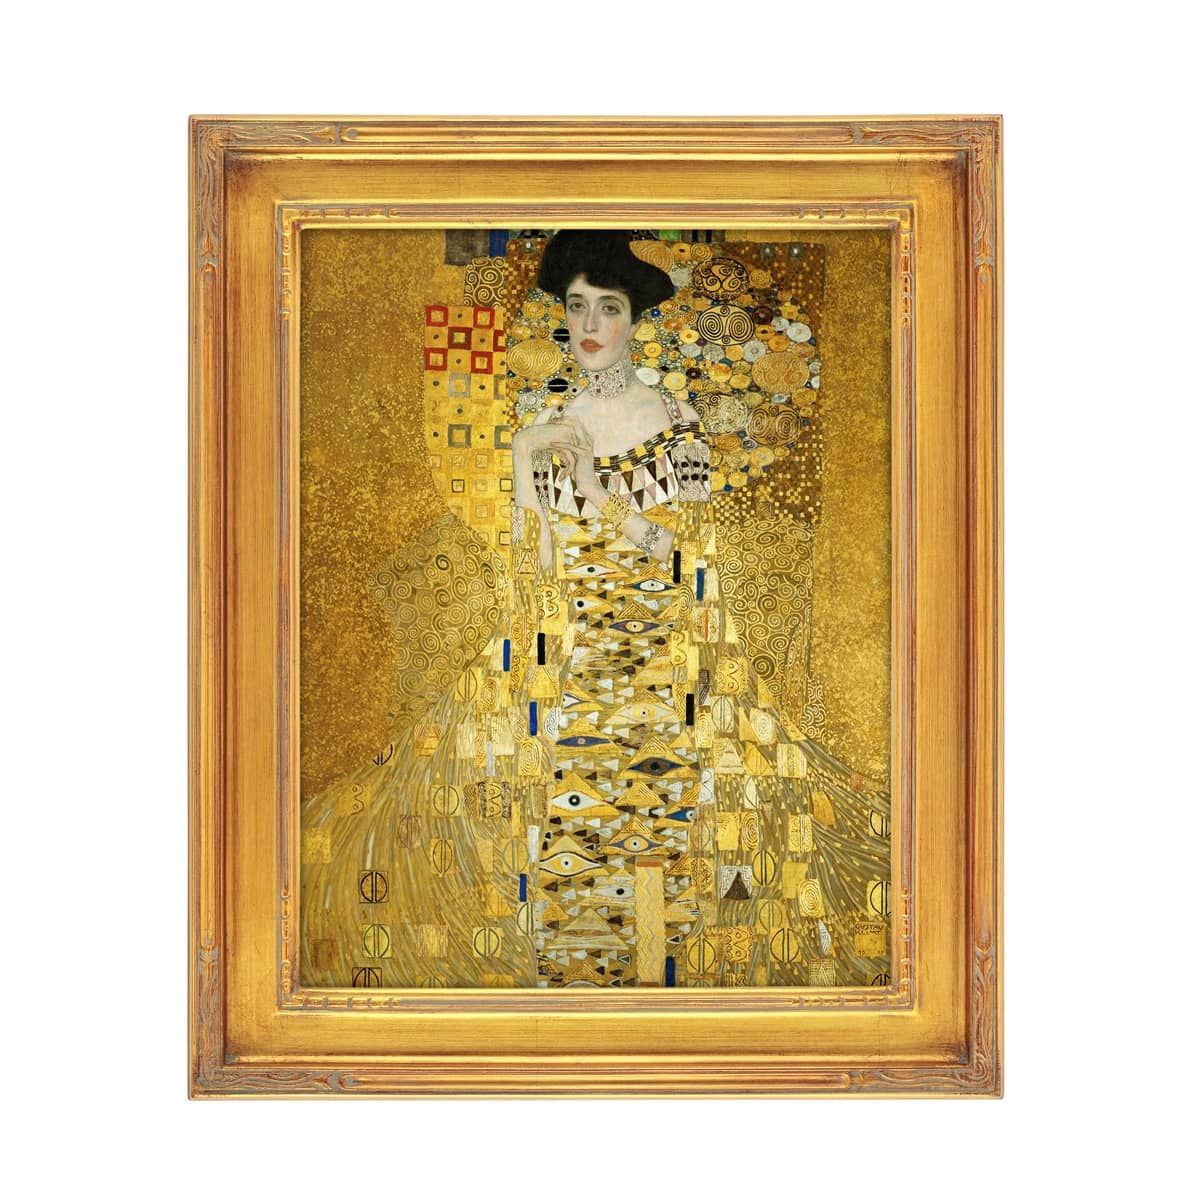 https://www.jerrysartarama.com/media/catalog/product/cache/ecb49a32eeb5603594b082bd5fe65733/m/u/museum-collection-frame-nouveau-gold-with-artwork-90217.jpg